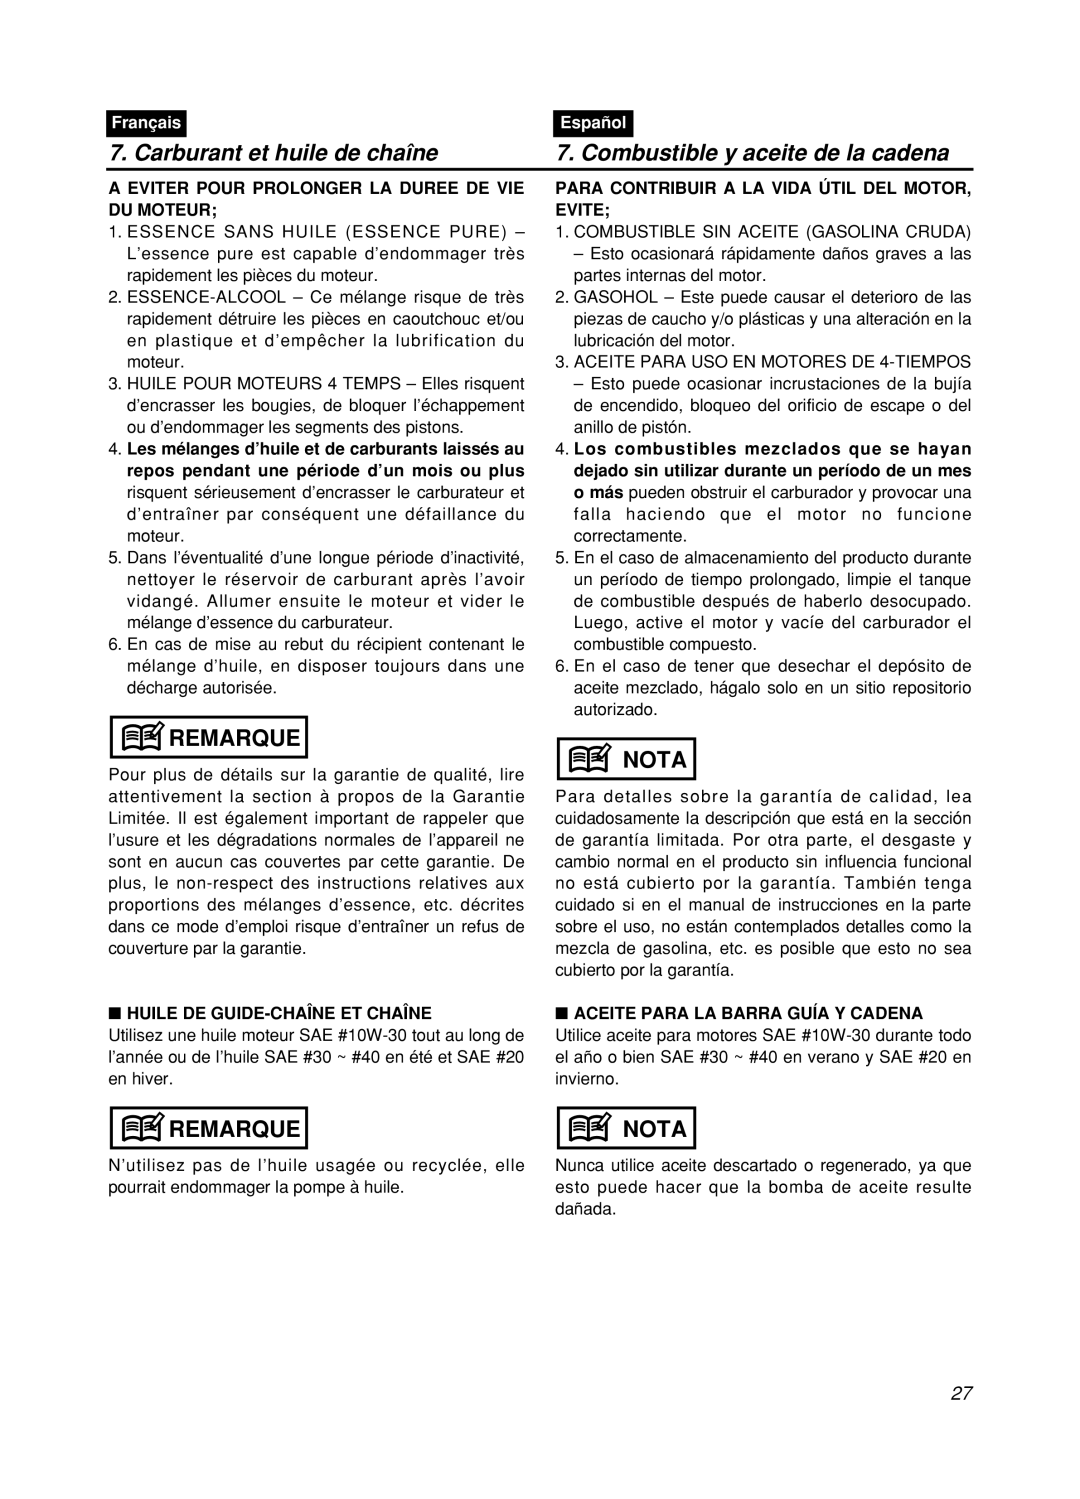 Zenoah GZ400 manual Carburant et huile de chaîne, Combustible y aceite de la cadena, Remarque, Nota, Français, Español 